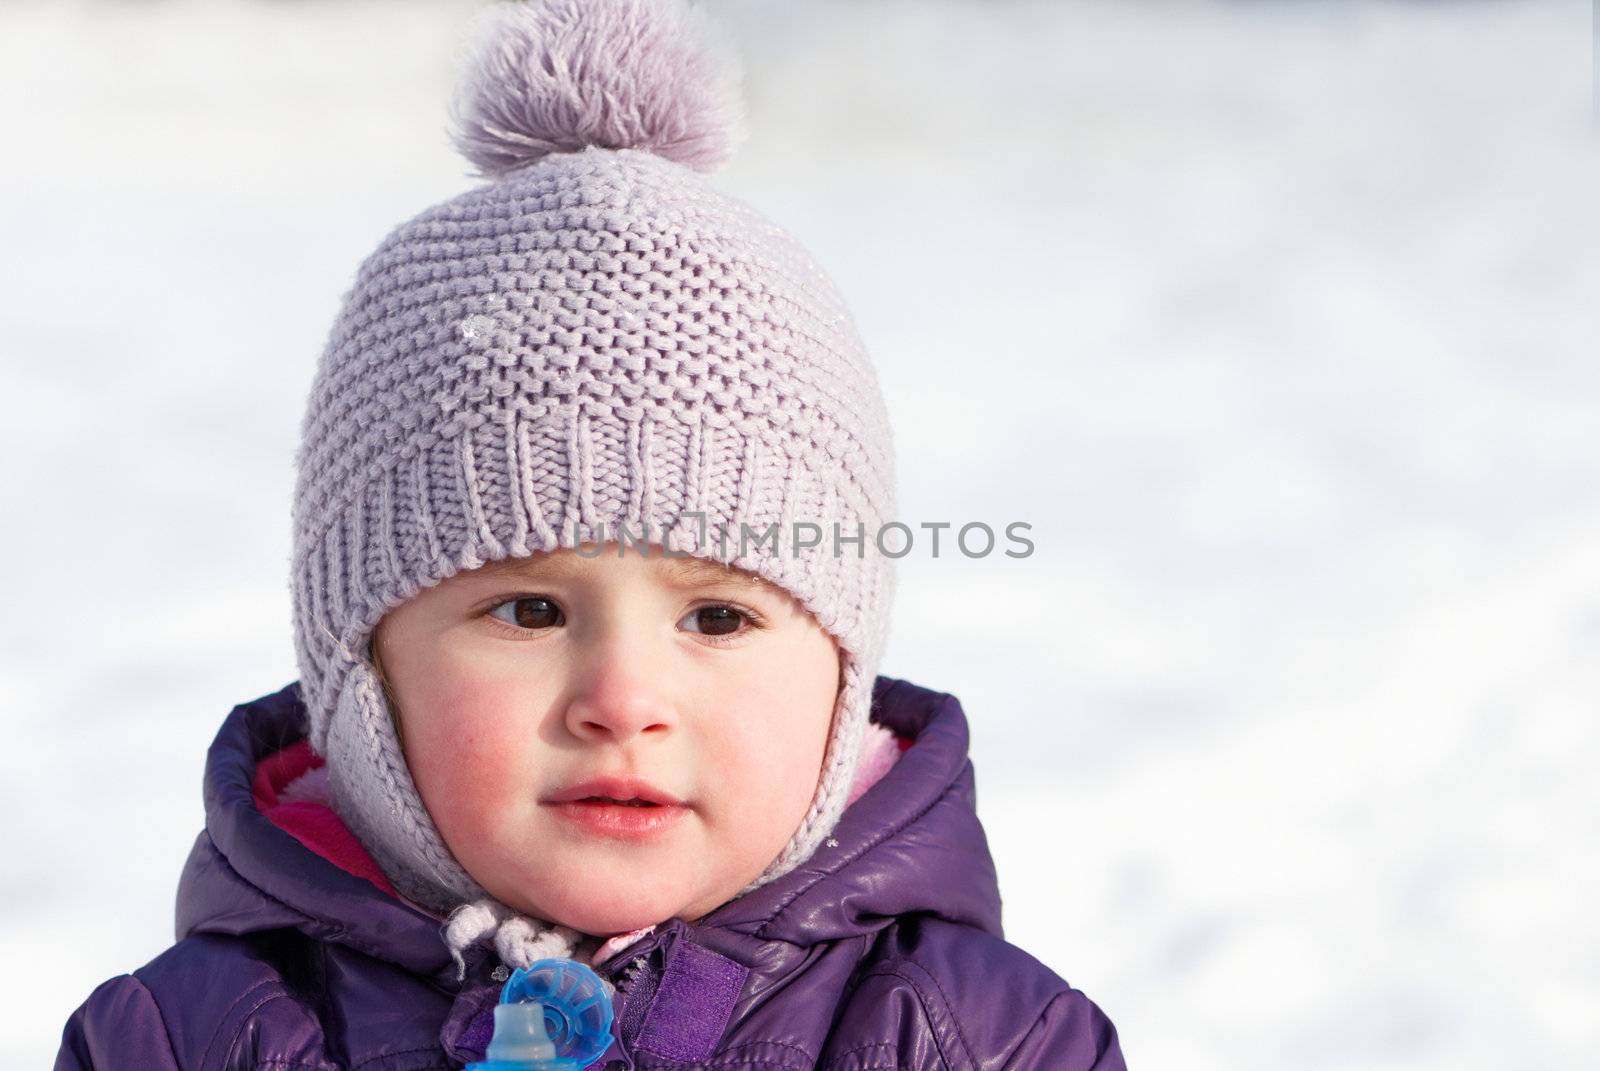 Little girl outdoor in winter by Olinkau